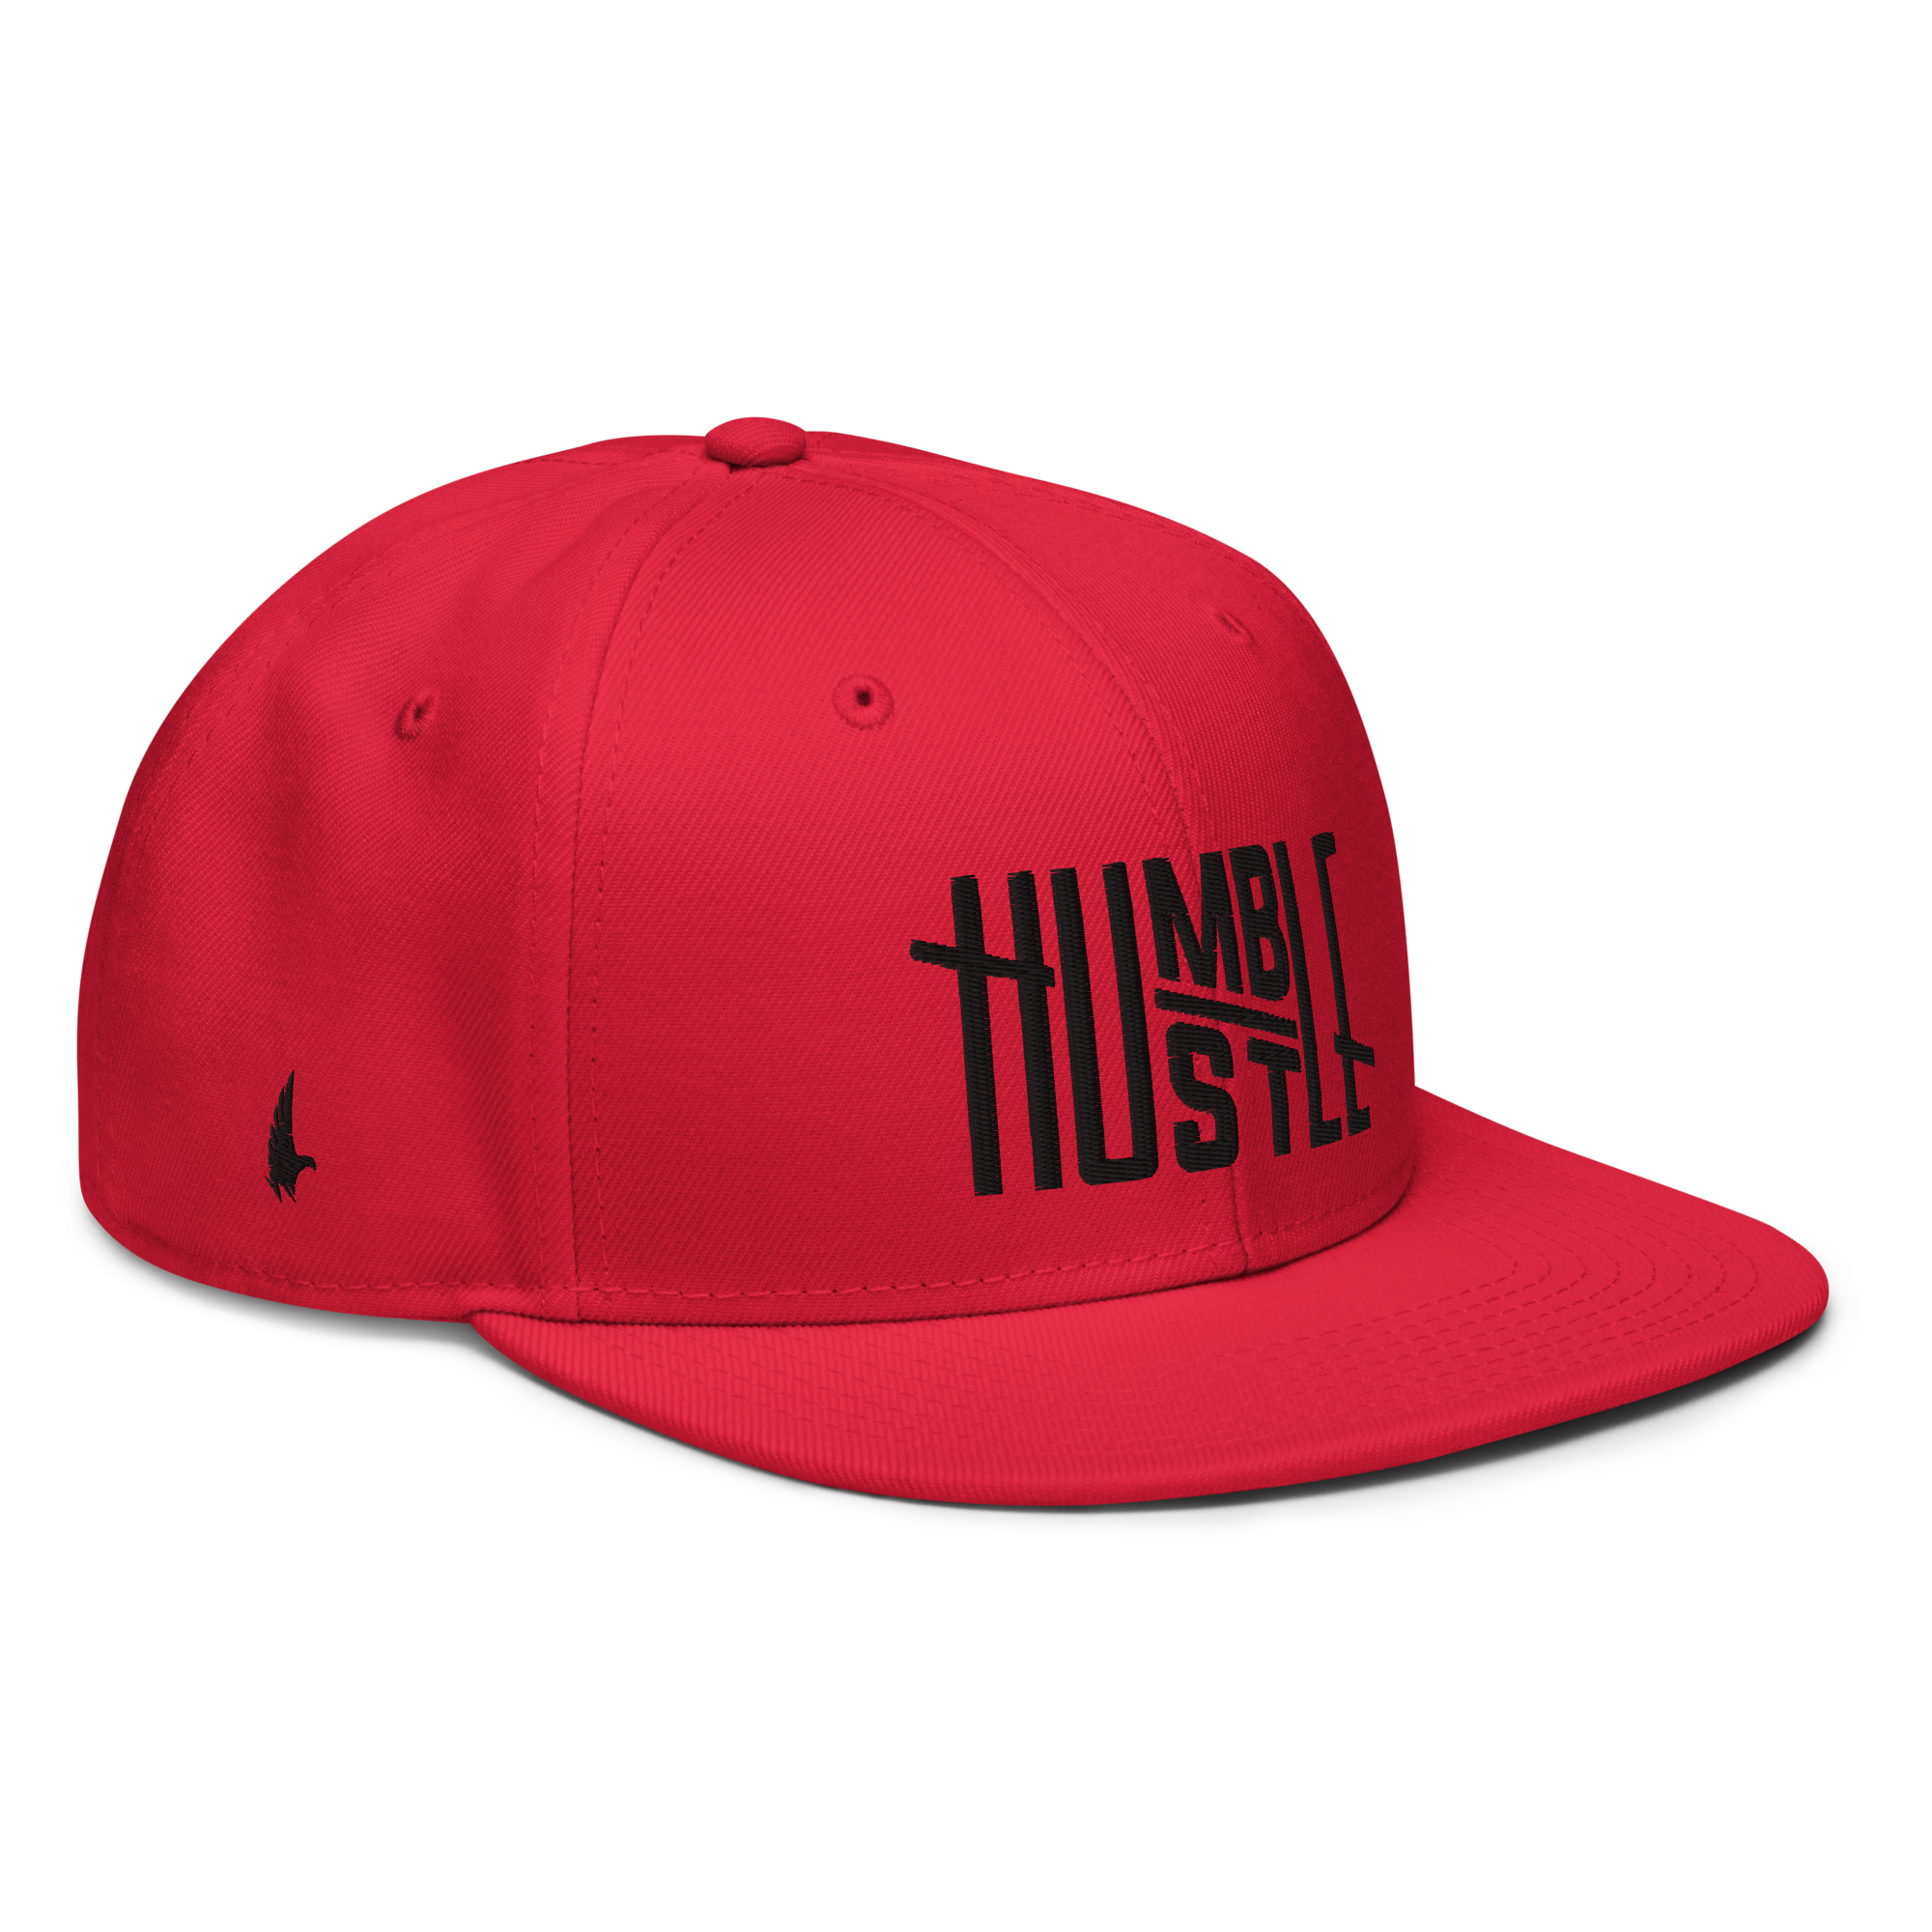 Humble Hustle Snapback Hat - Red/Black OS - Loyalty Vibes